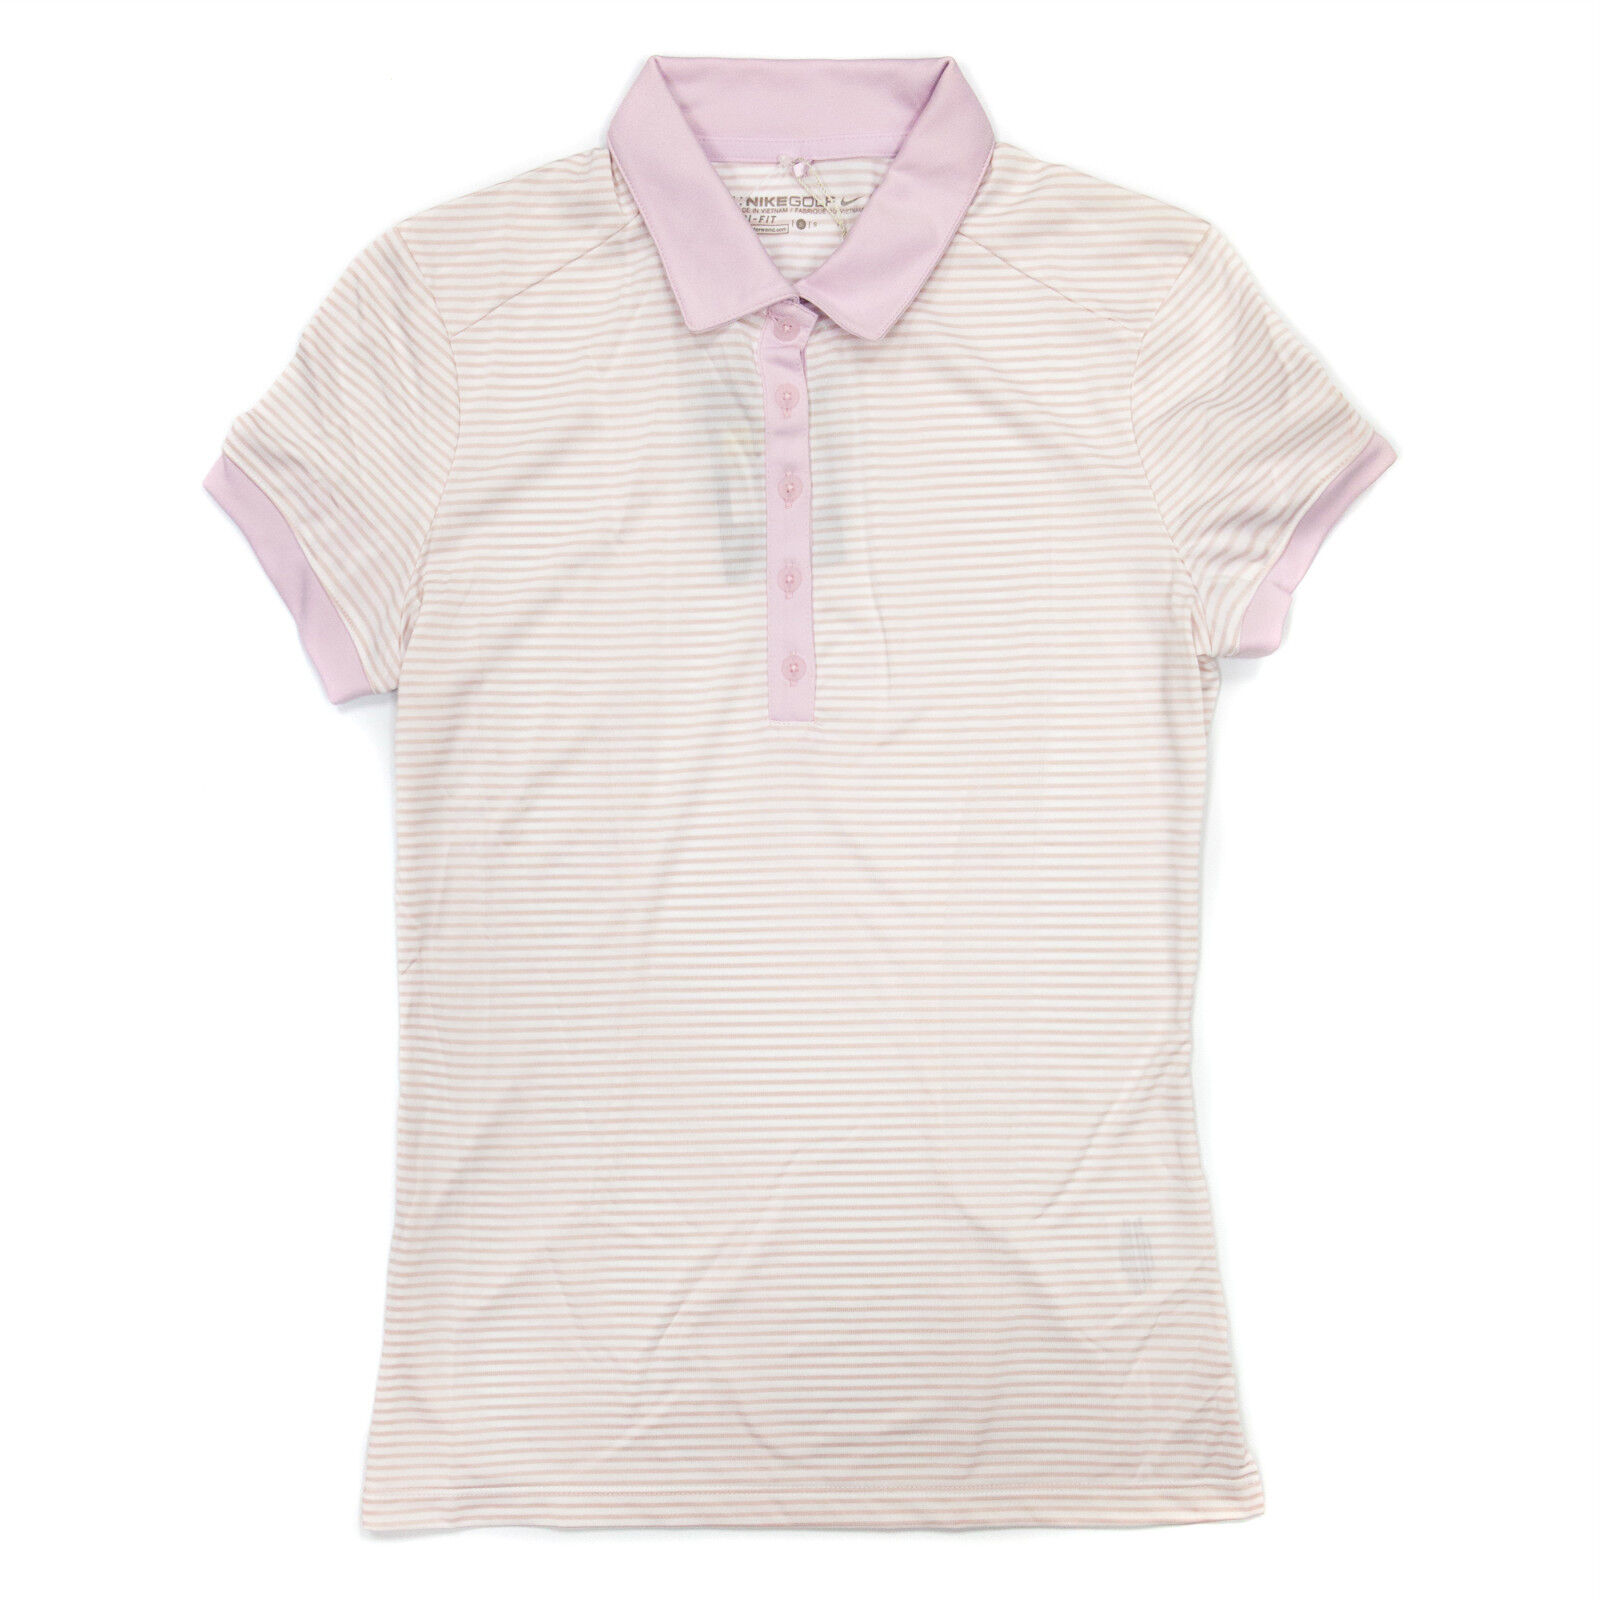 Nike Victory Stripe Women\'s Golf Polo Shirt 725585 Small $60.00